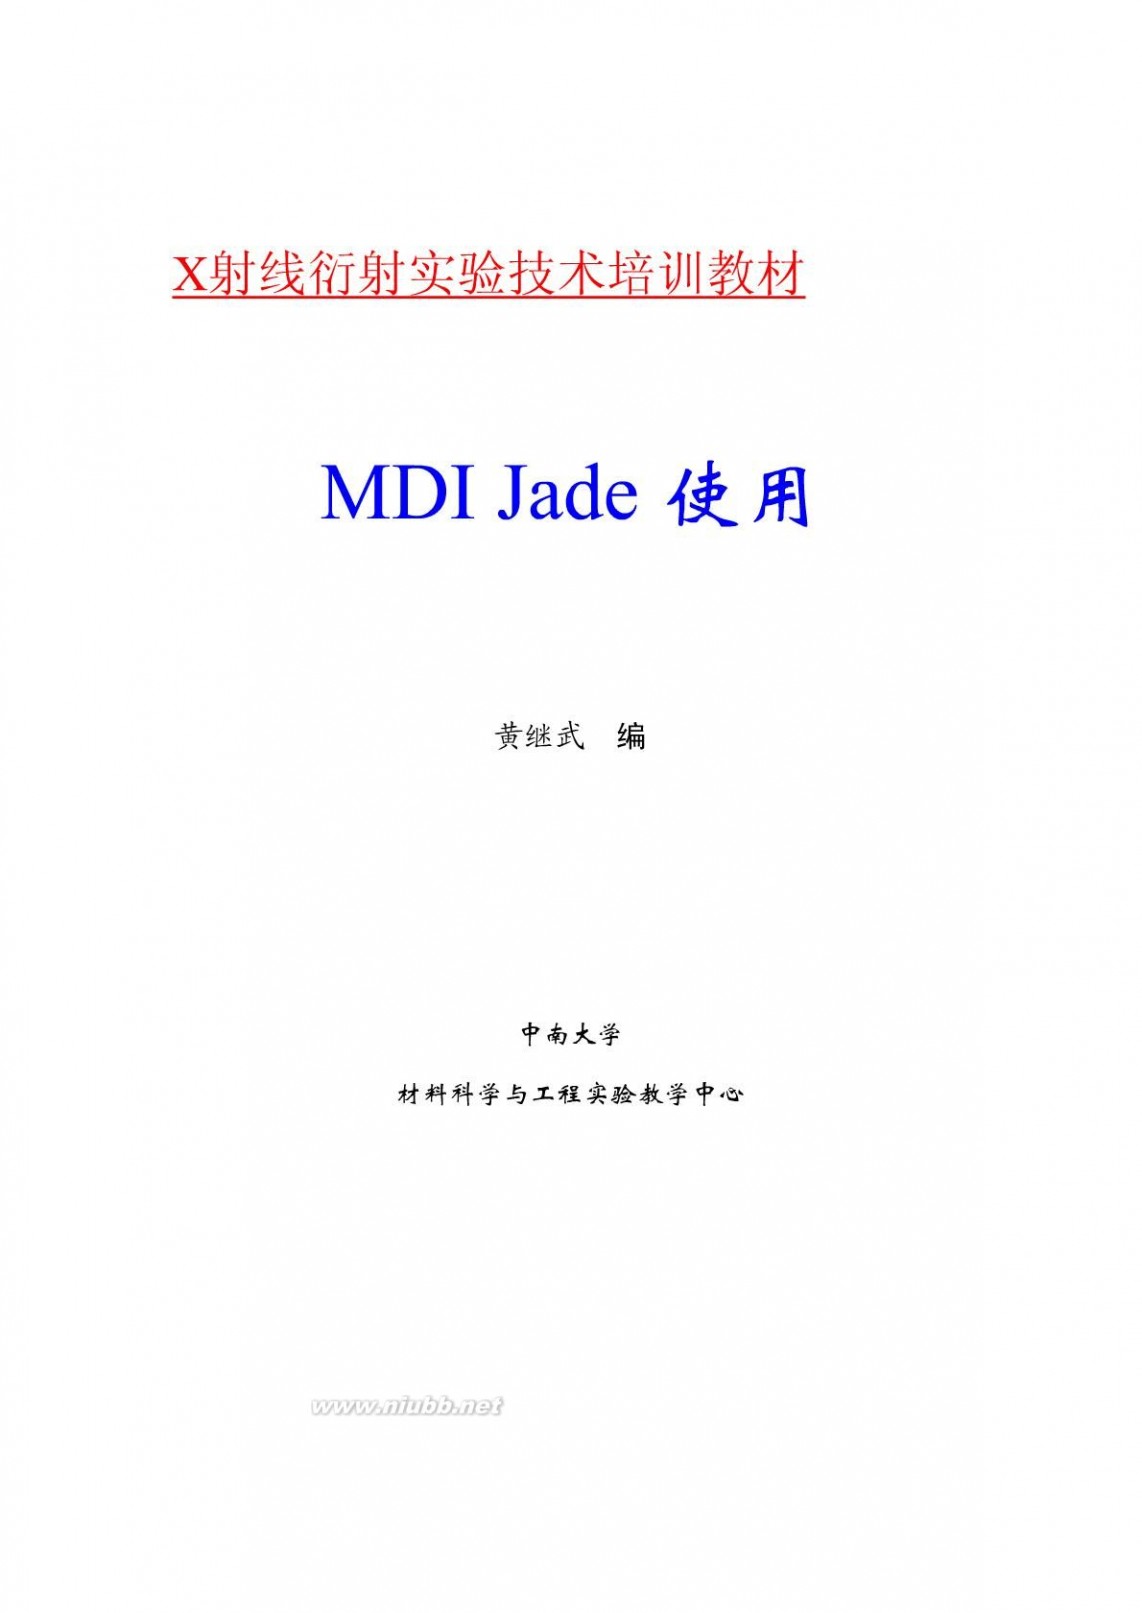 jade5.0教程 MDI Jade 5.0 使用教程 第四版